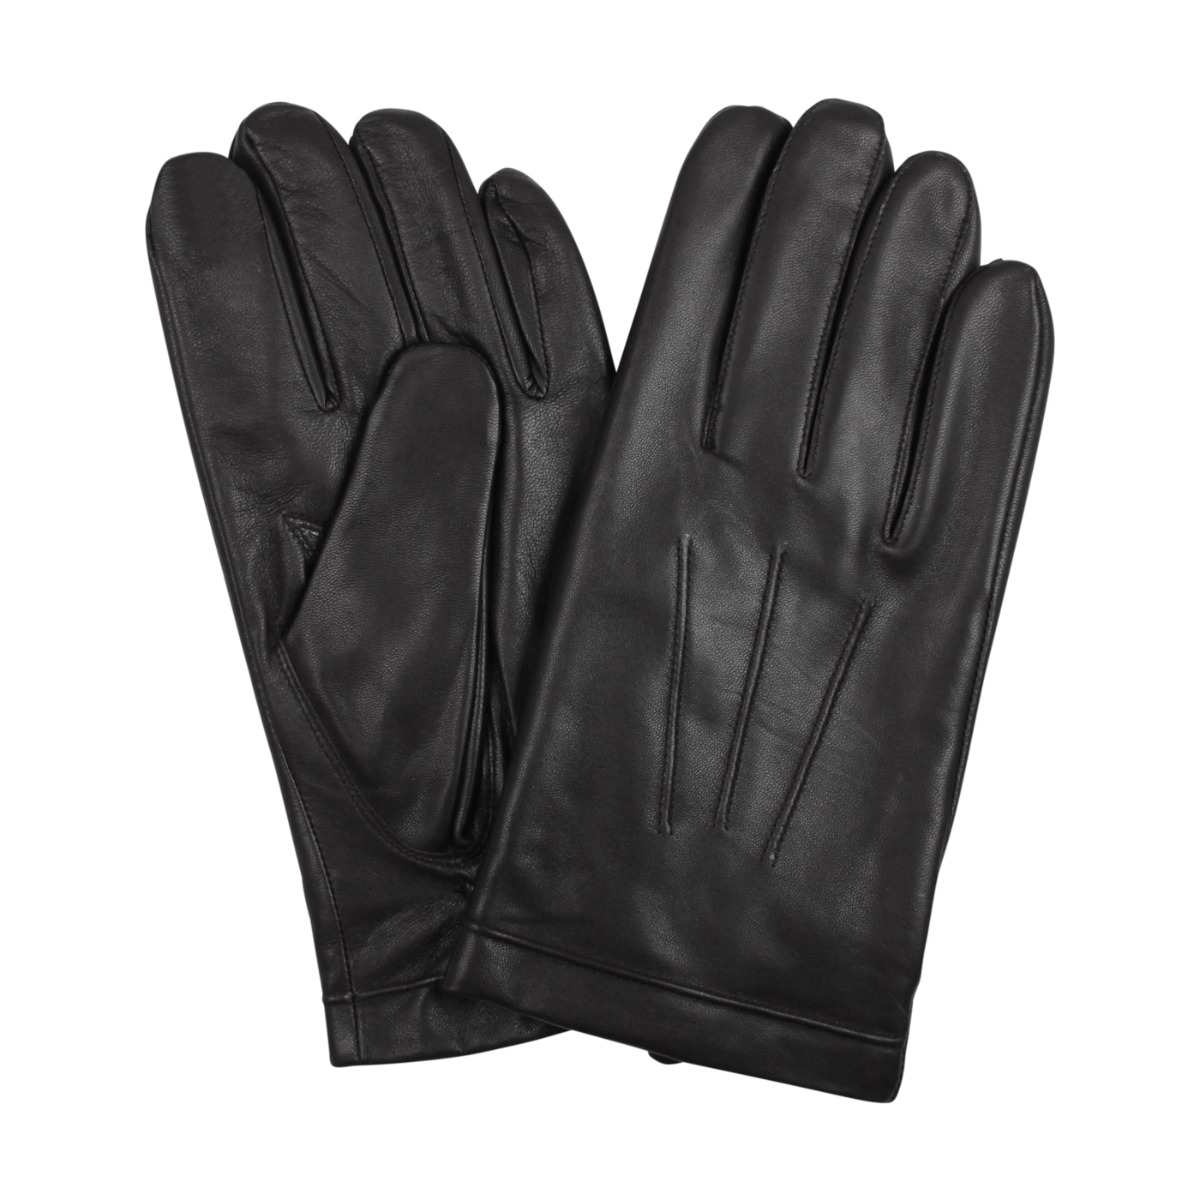 Amanda Christensen Leather Gloves